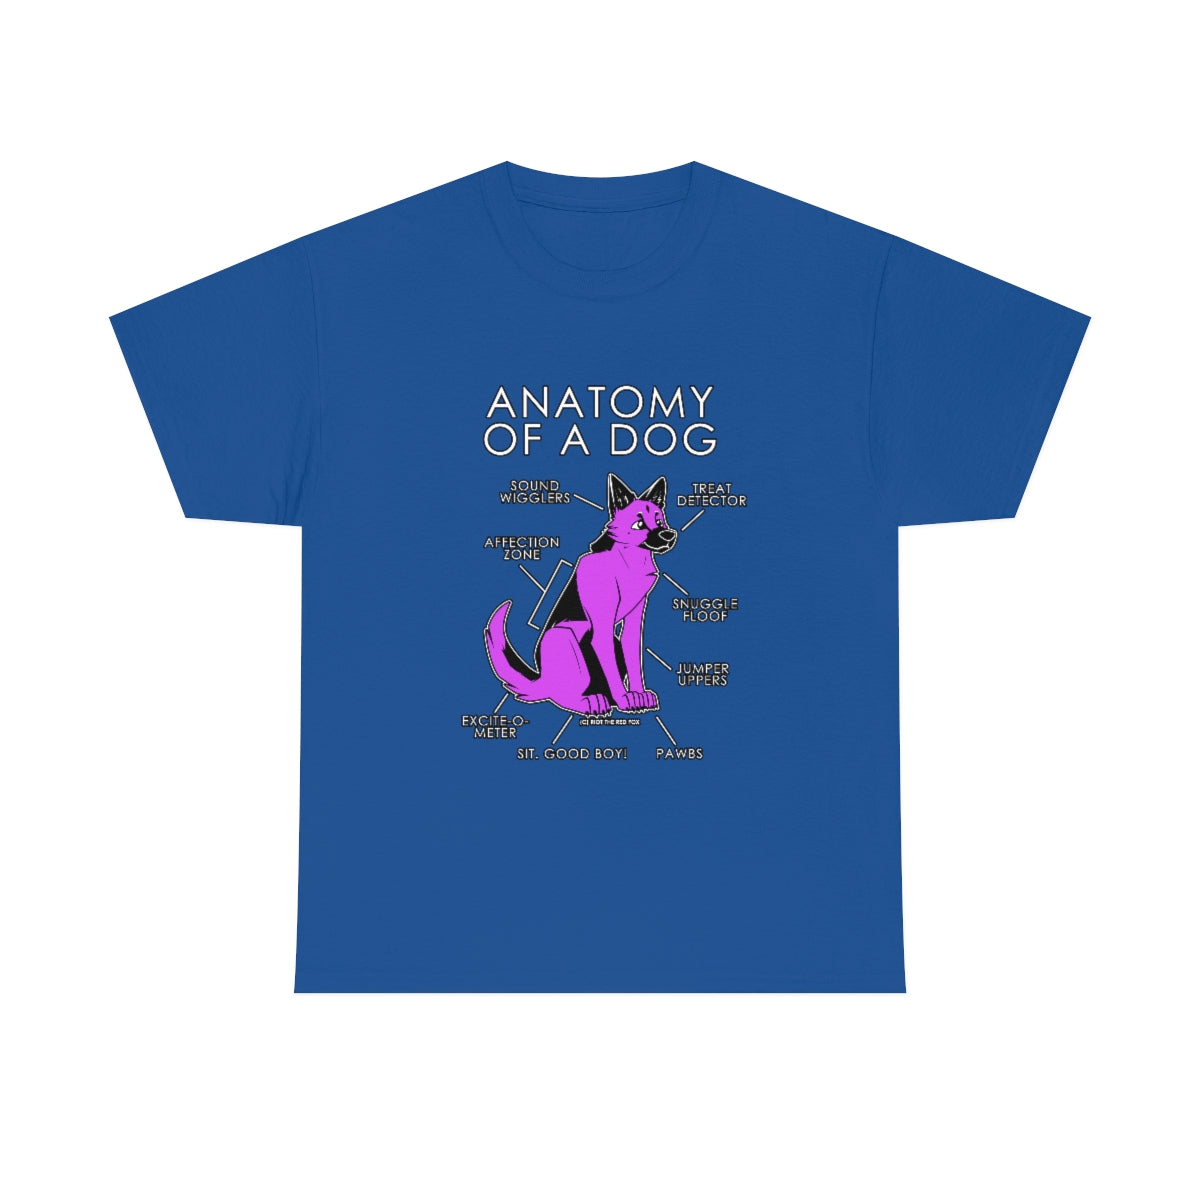 Dog Pink - T-Shirt T-Shirt Artworktee Royal Blue S 